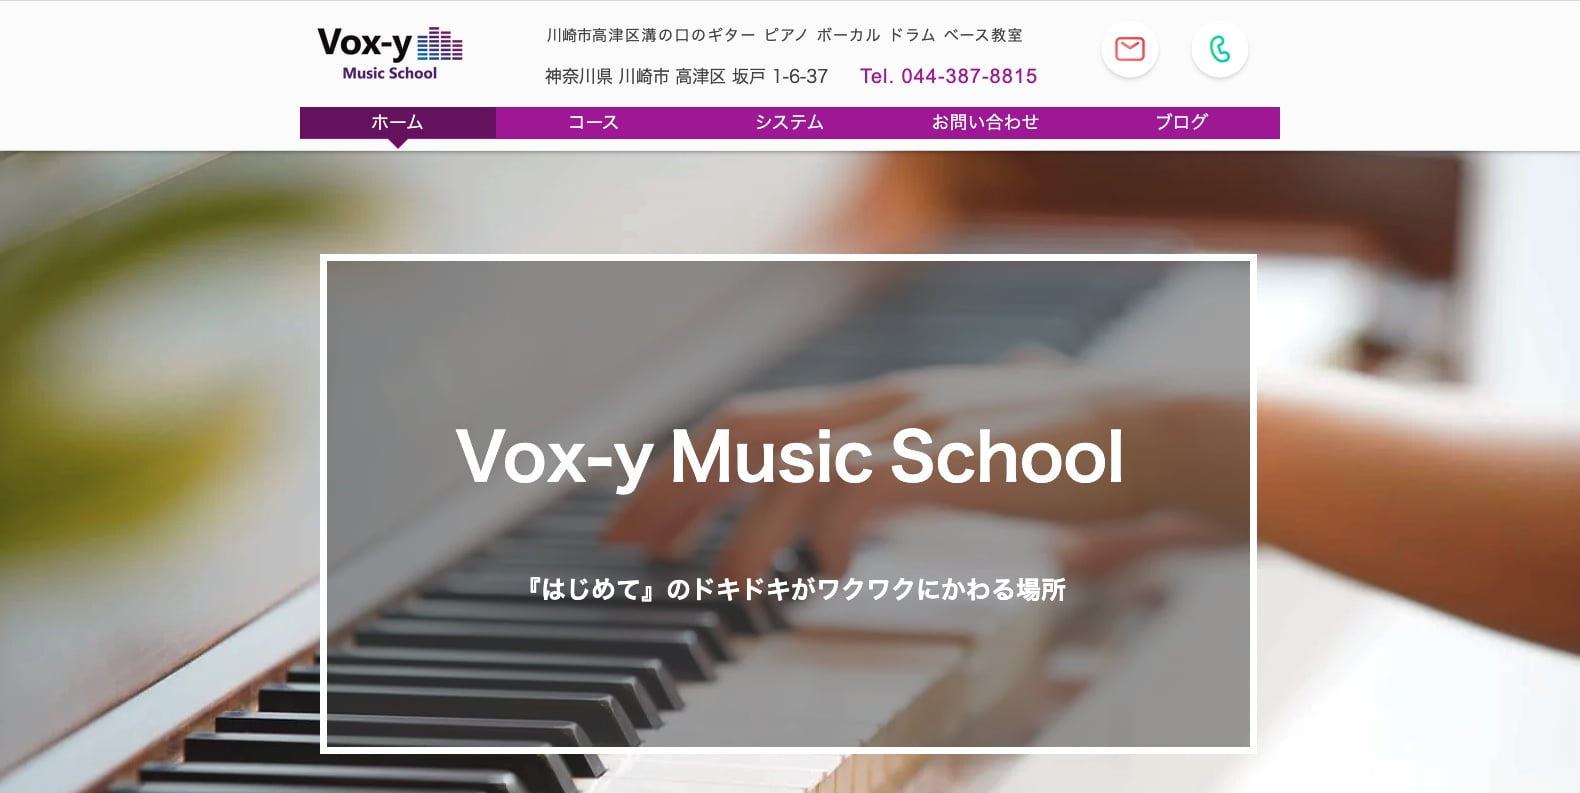 Vox-y Music School